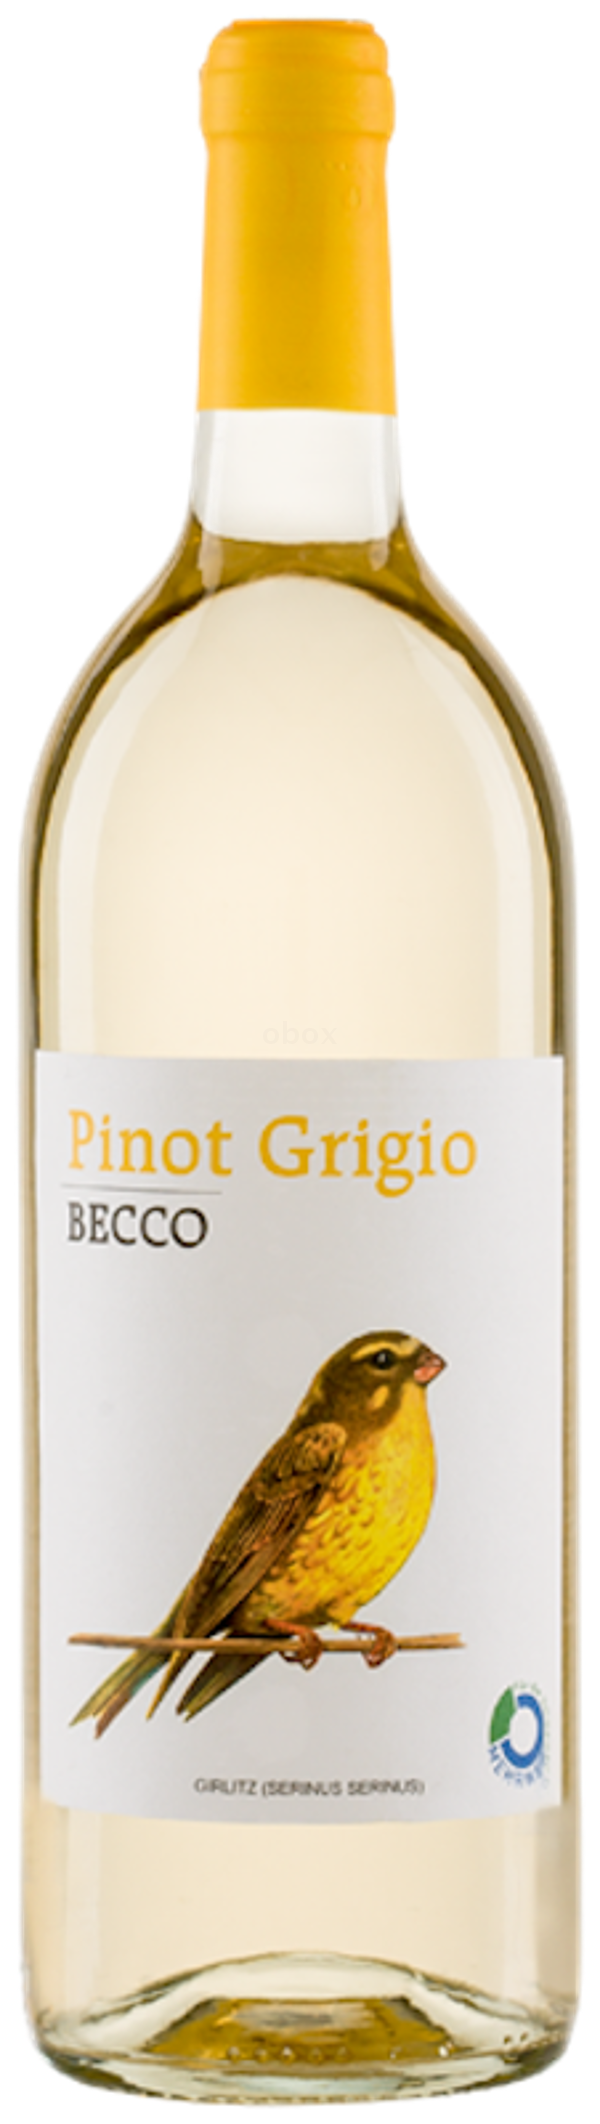 Produktfoto zu BECCO Pinot Grigio IGT, trocken - 1l